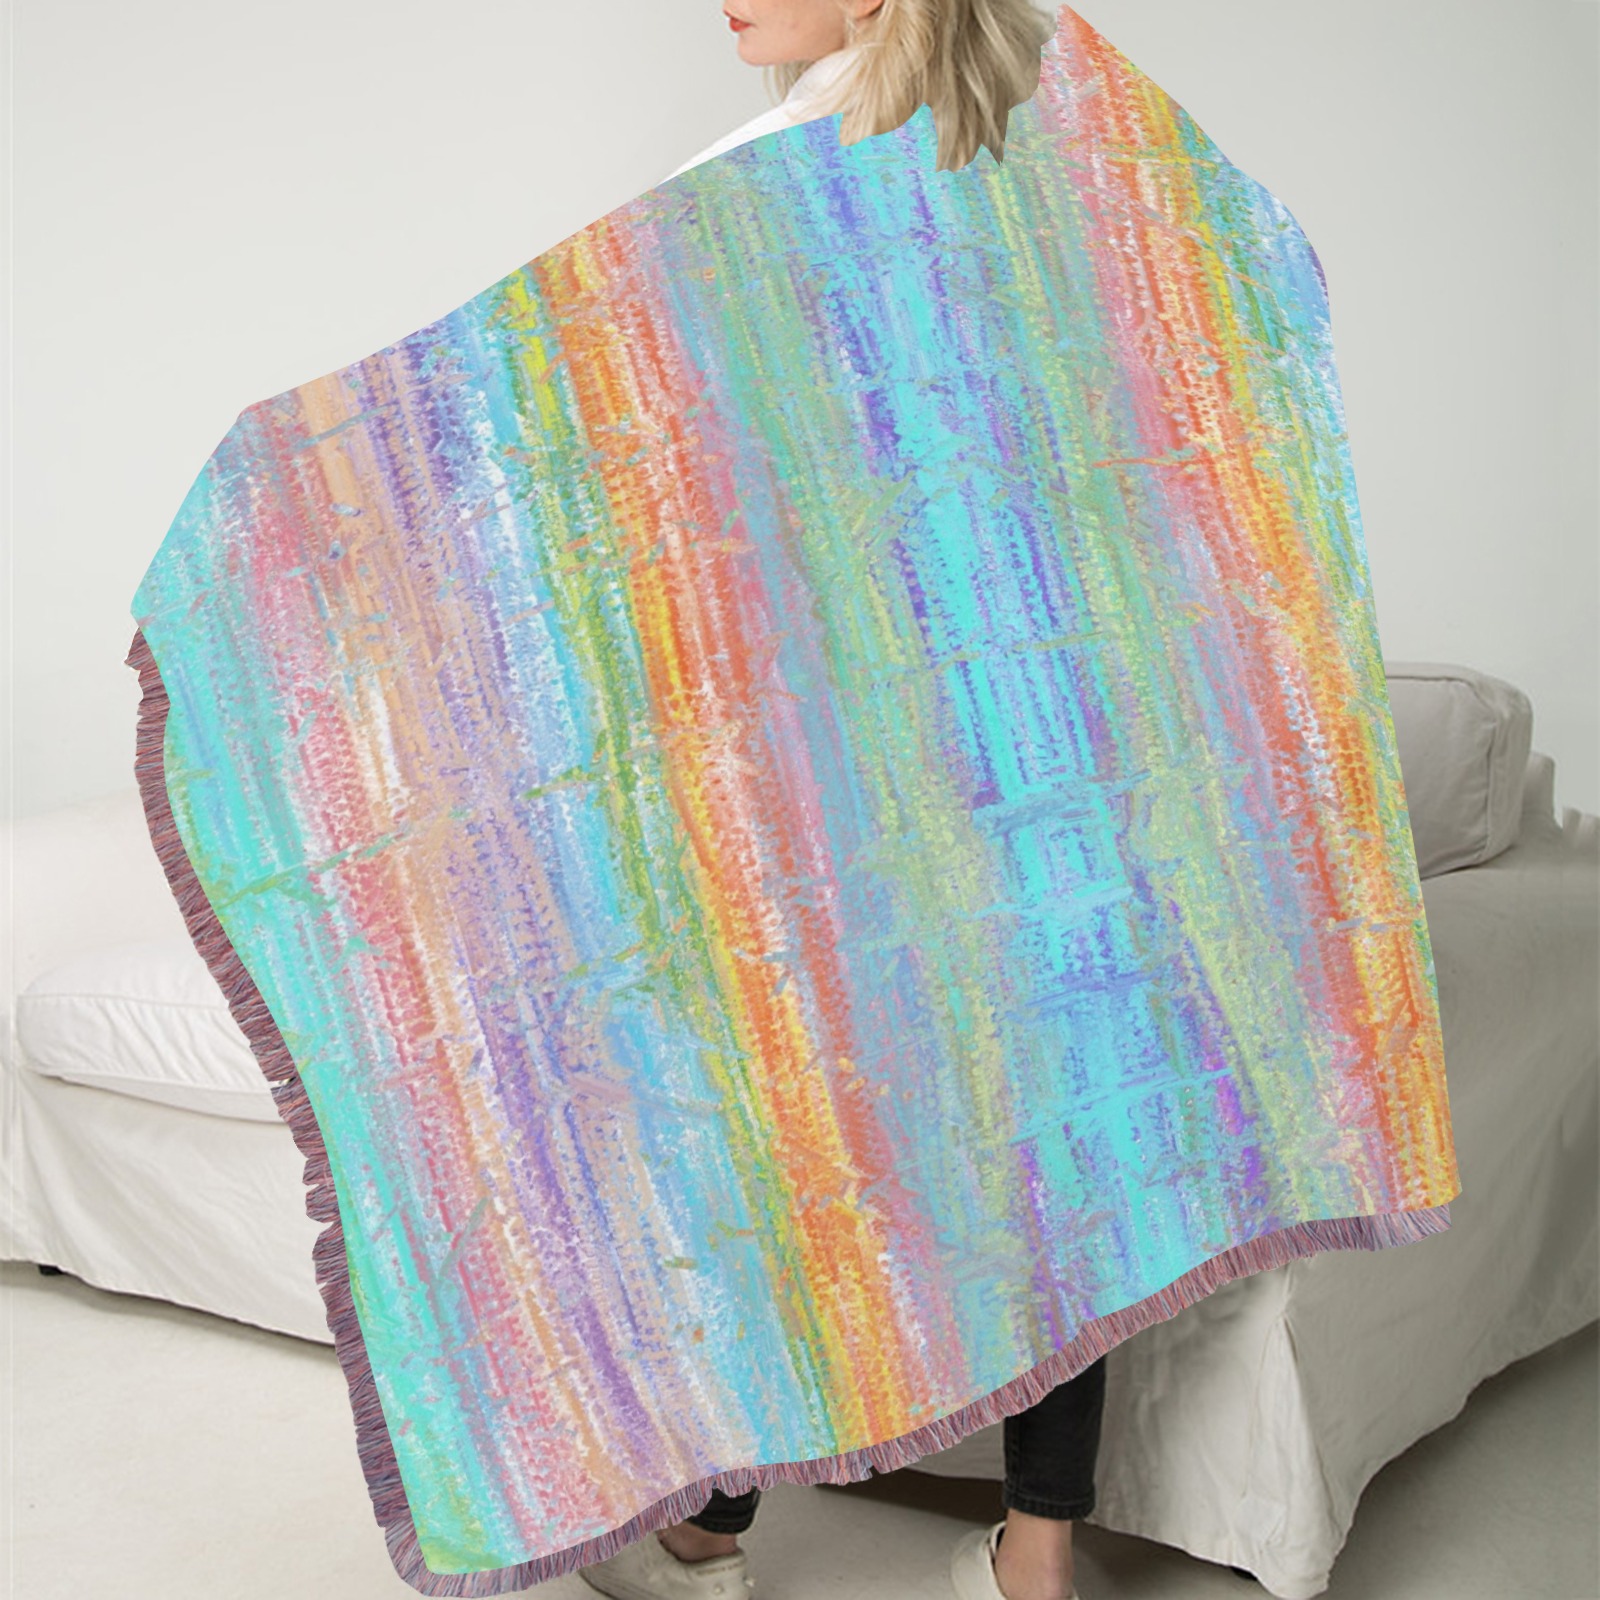 confetti 2 Ultra-Soft Fringe Blanket 60"x80" (Mixed Pink)